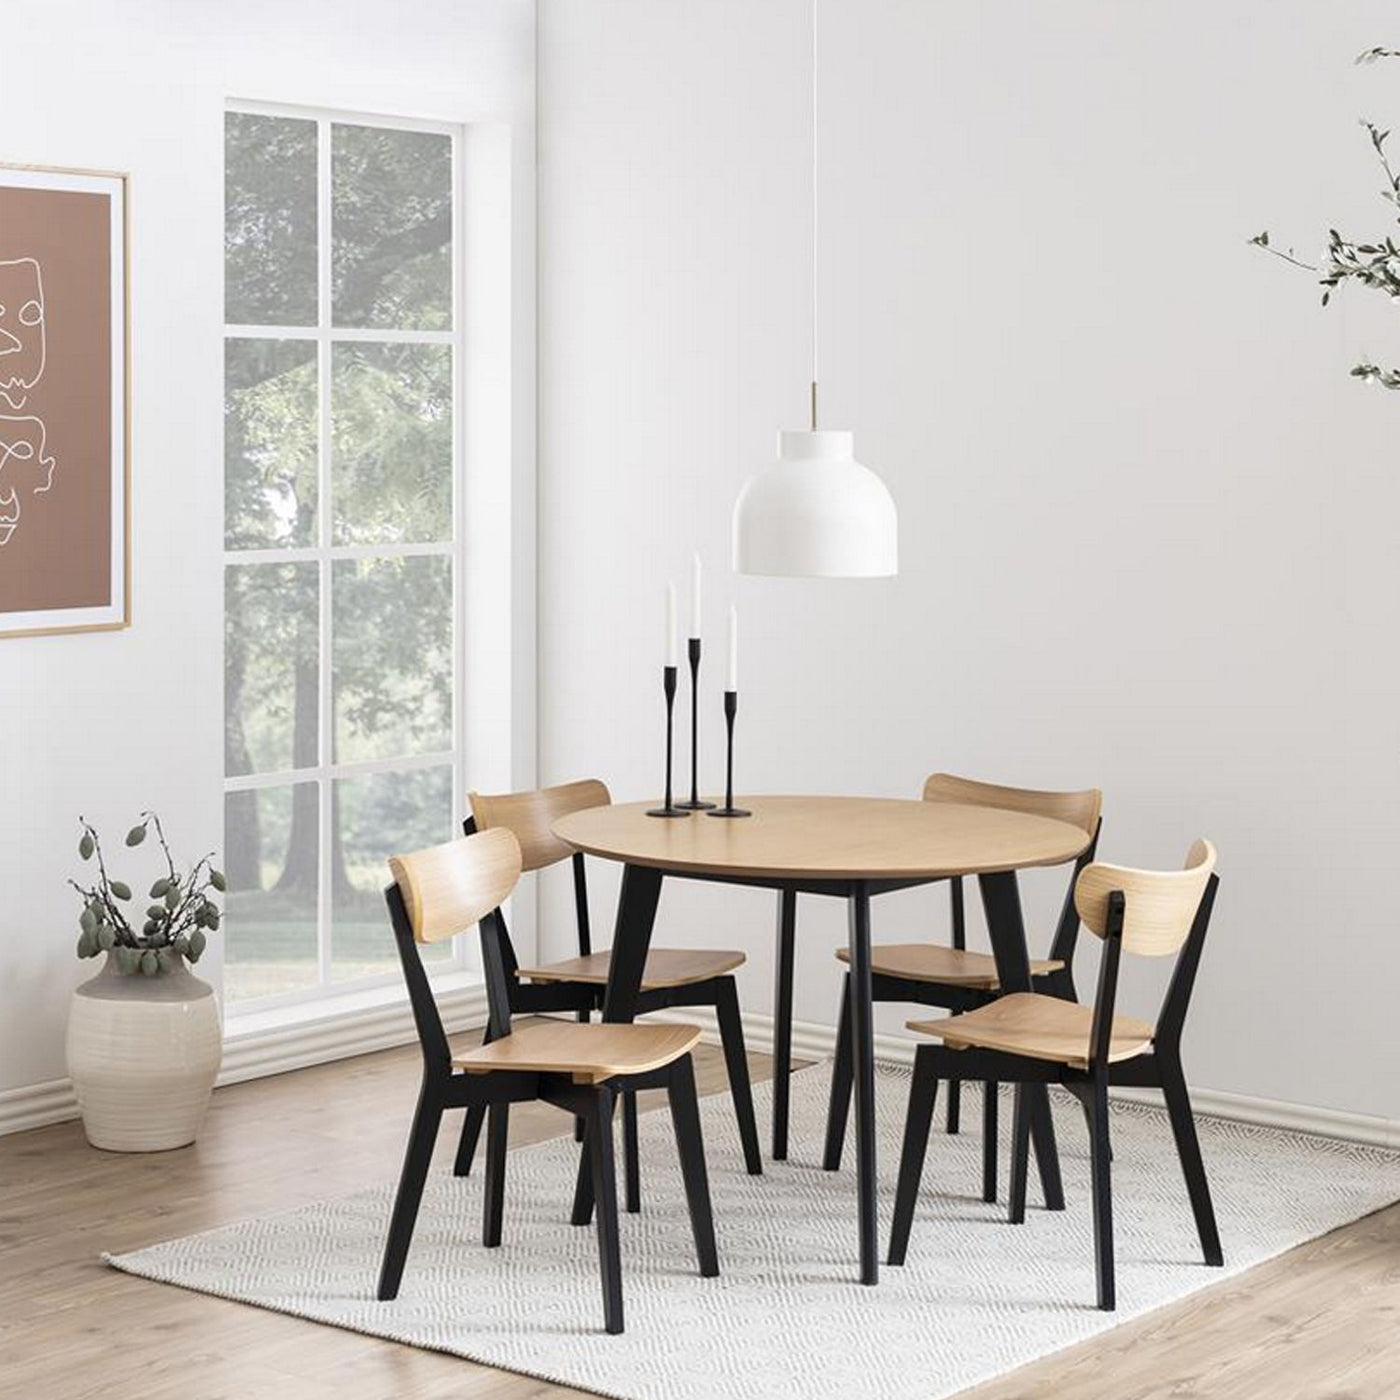 Roxby ruokapöytä Ø 105 cm, tammi/musta - Mööpeli.com